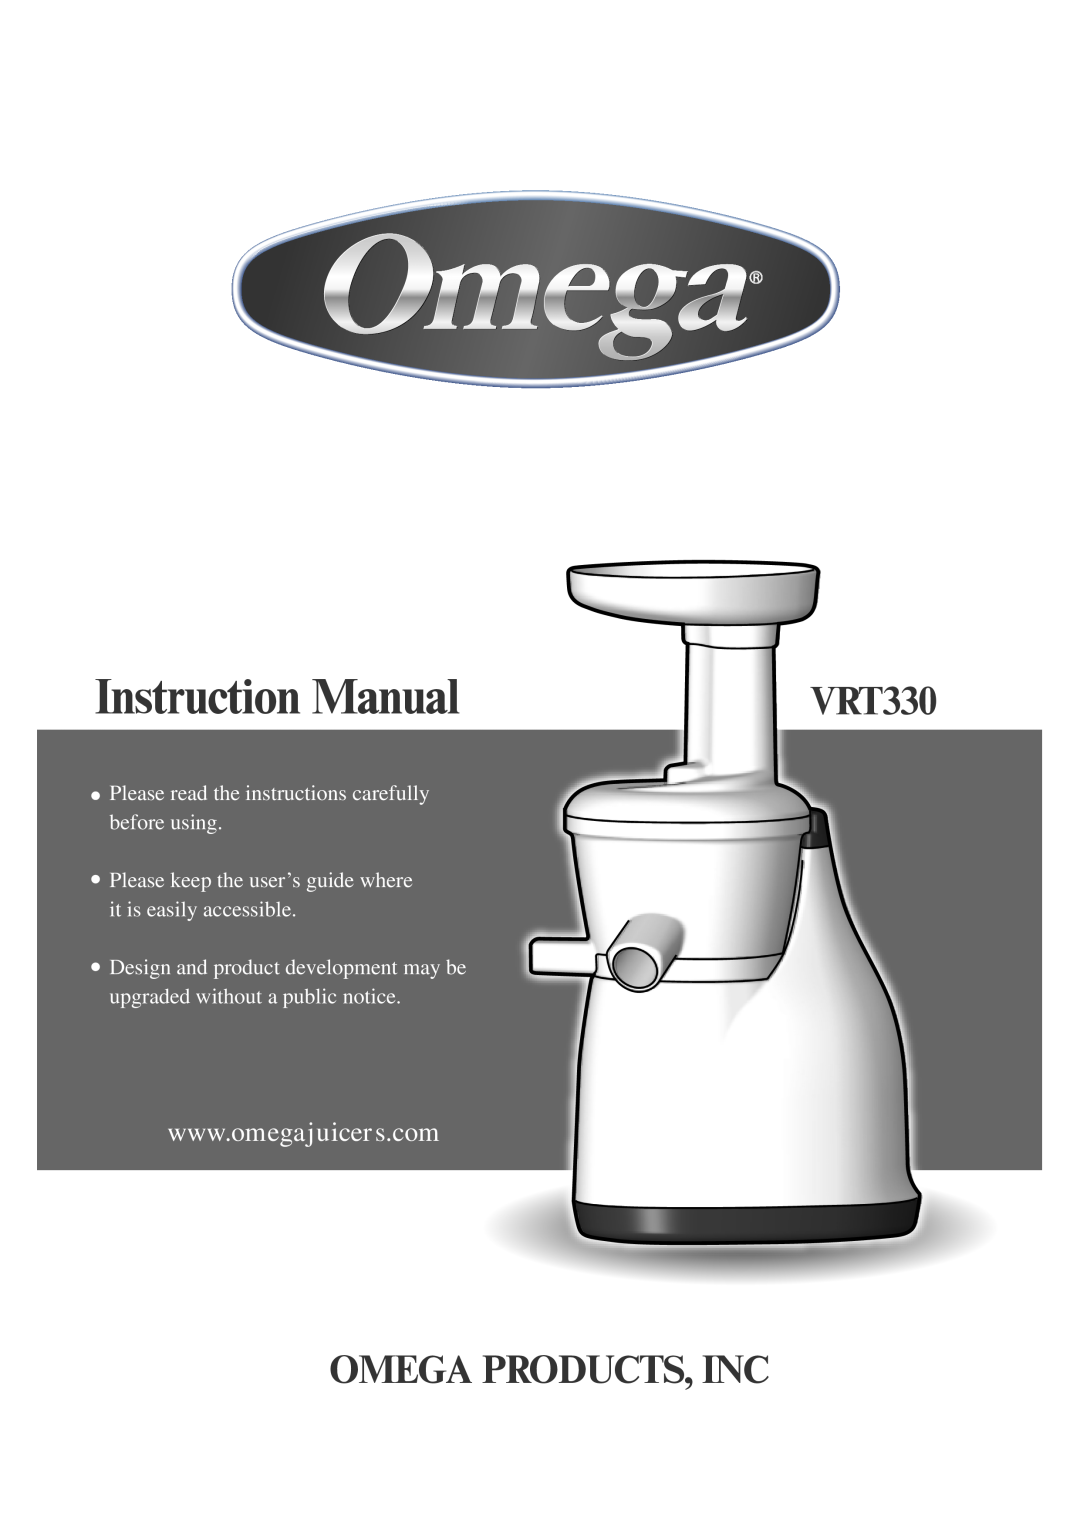 Omega VRT330 instruction manual Omega Products, Inc, Please read the instructions carefully before using 